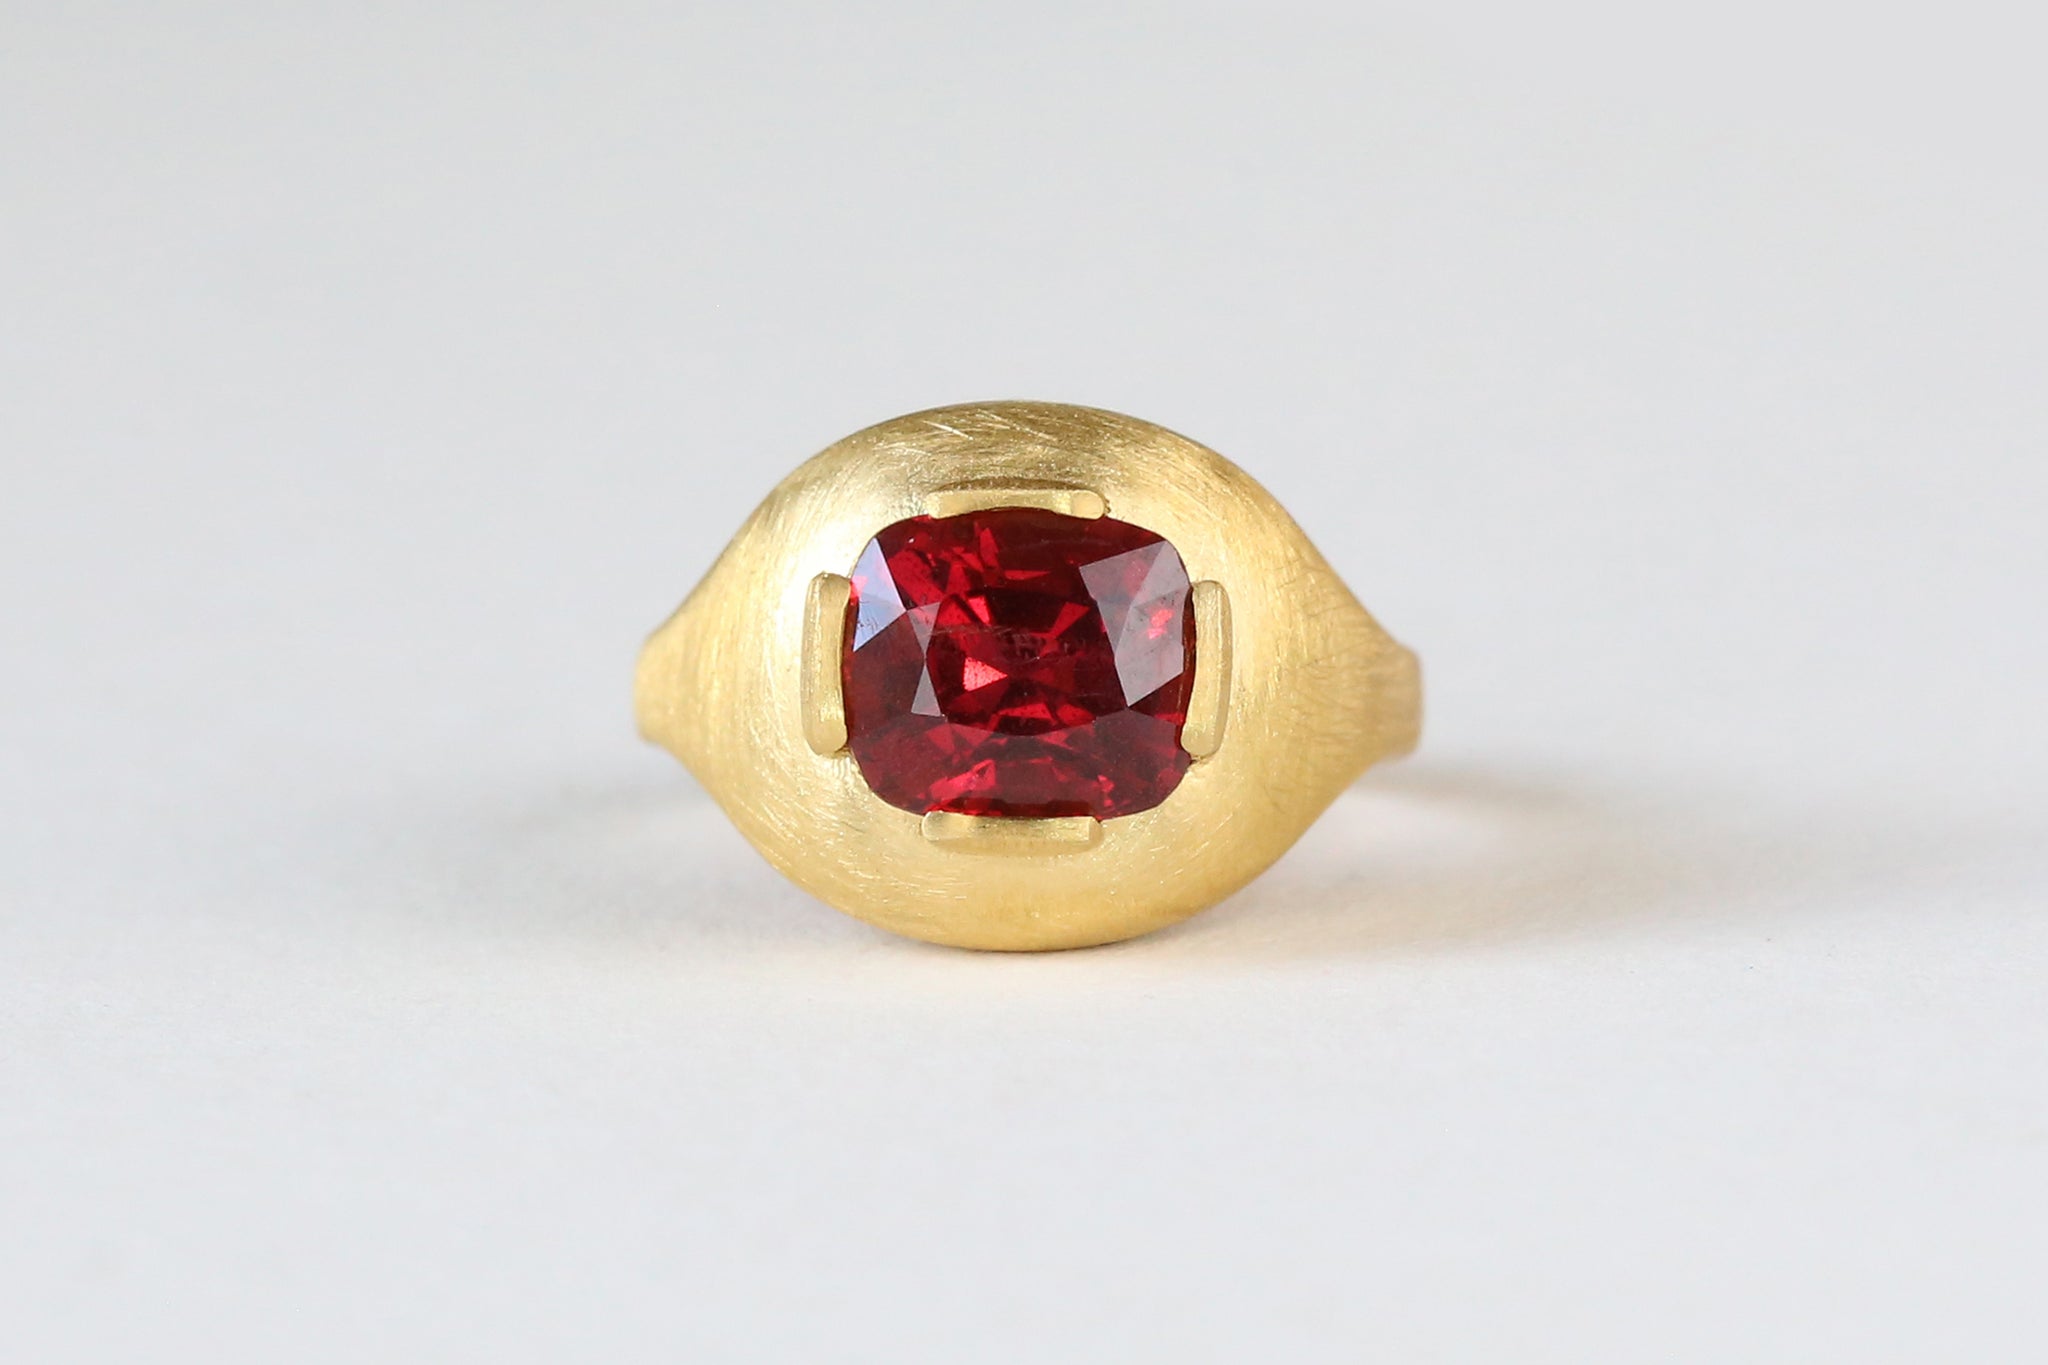 22k Gold Red Spinel Ring - S. Kind & Co